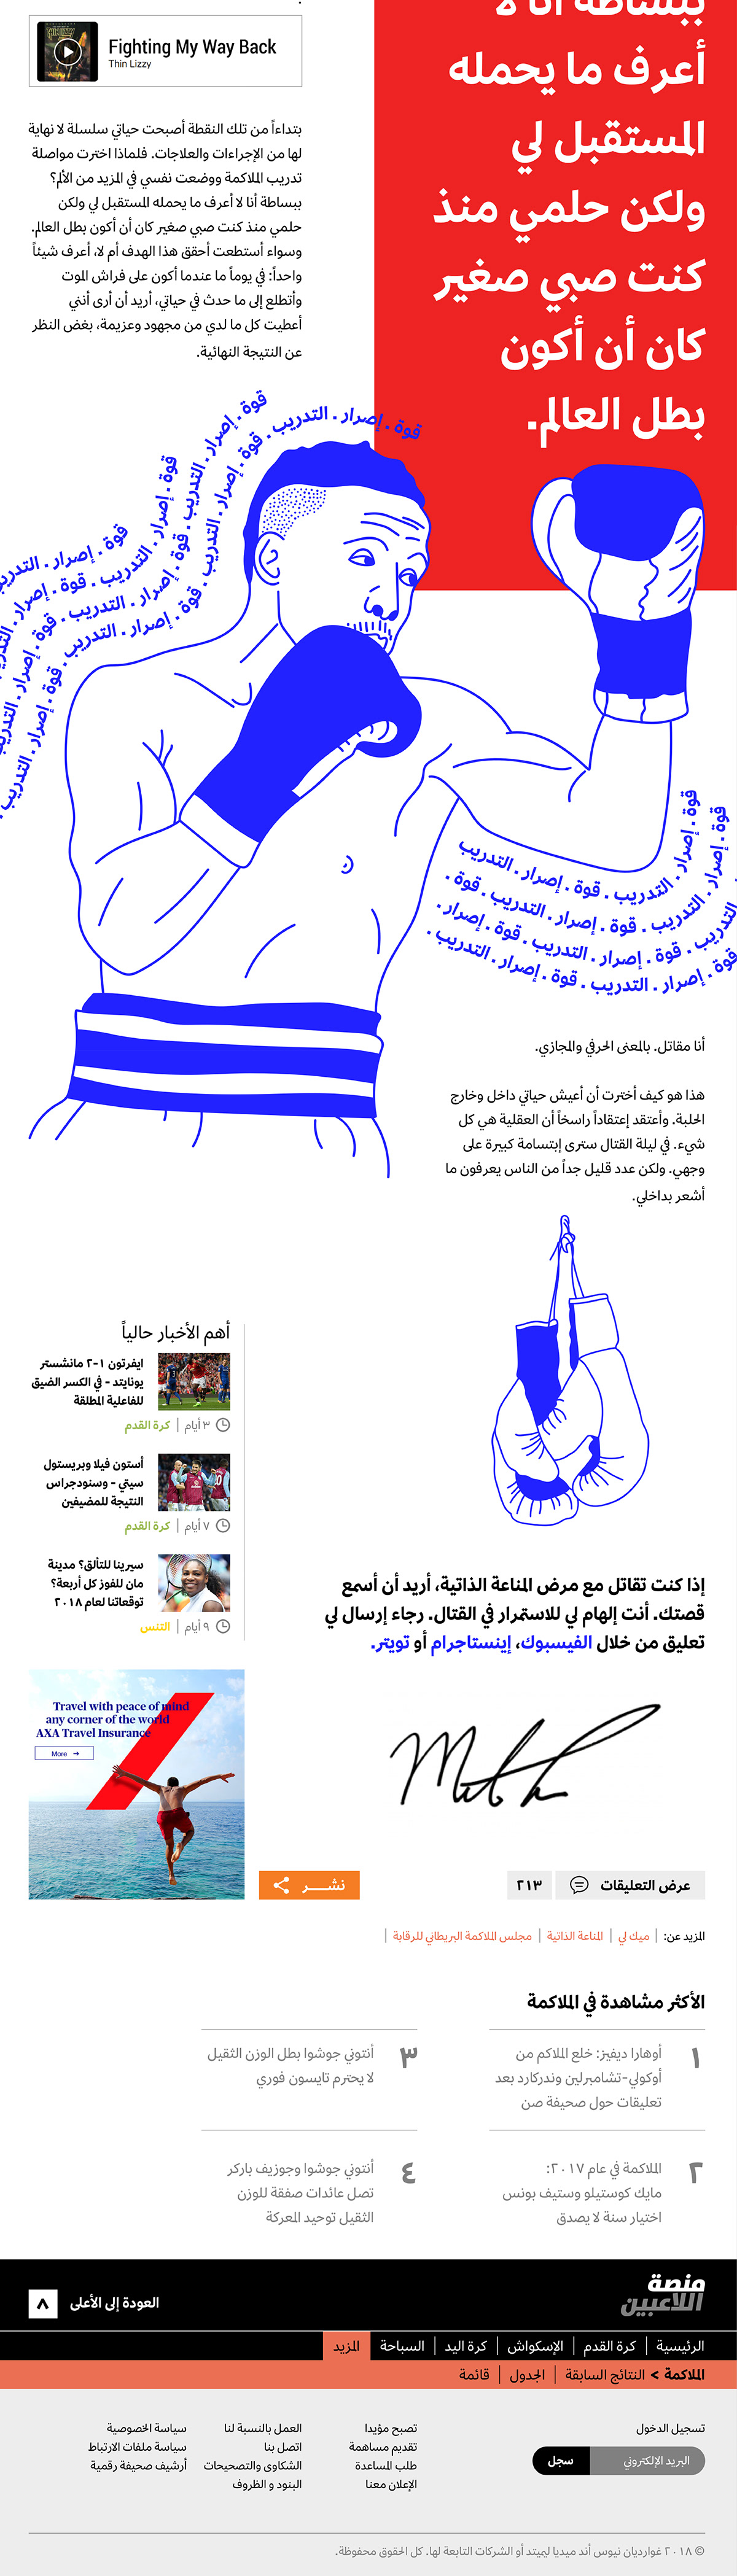 Webdesign sports Boxing battle article Visual Information ILLUSTRATION  Digital Art  news arabic